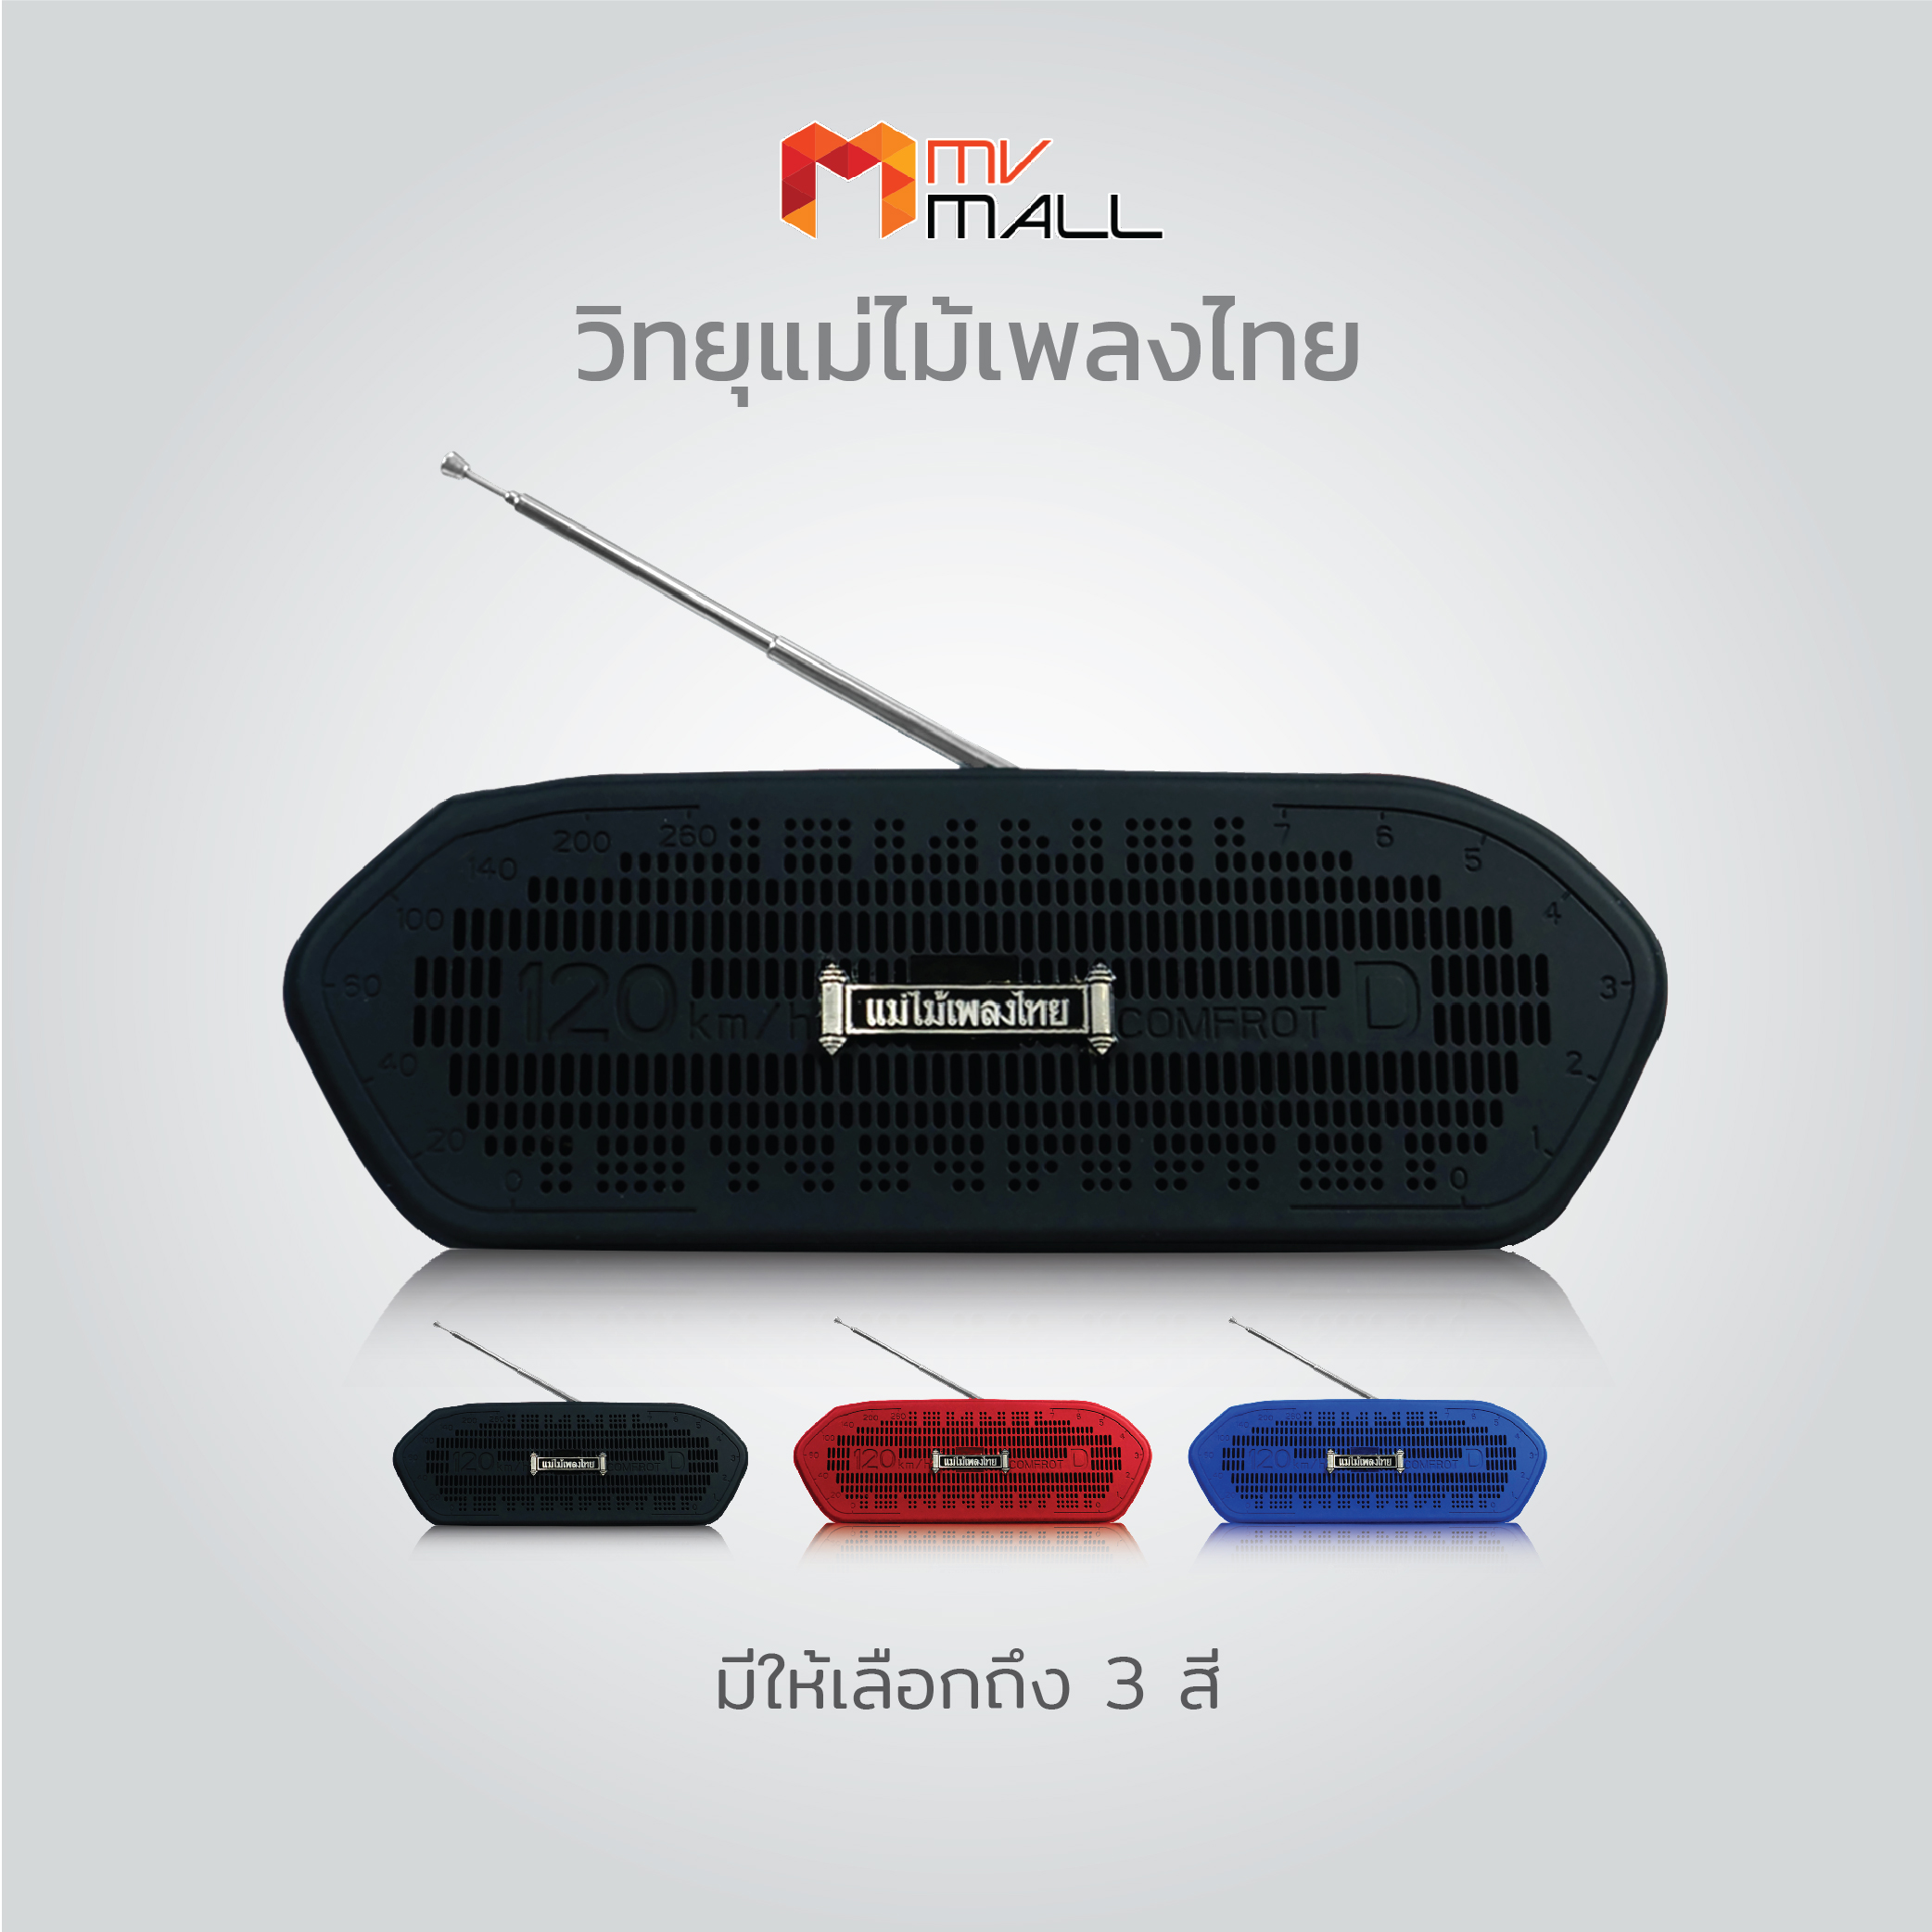 MVmall1264 วิทยุพกพา รุ่น แอคทีฟ จิ๋วแต่แจ๋ว แม่ไม้เพลงไทย